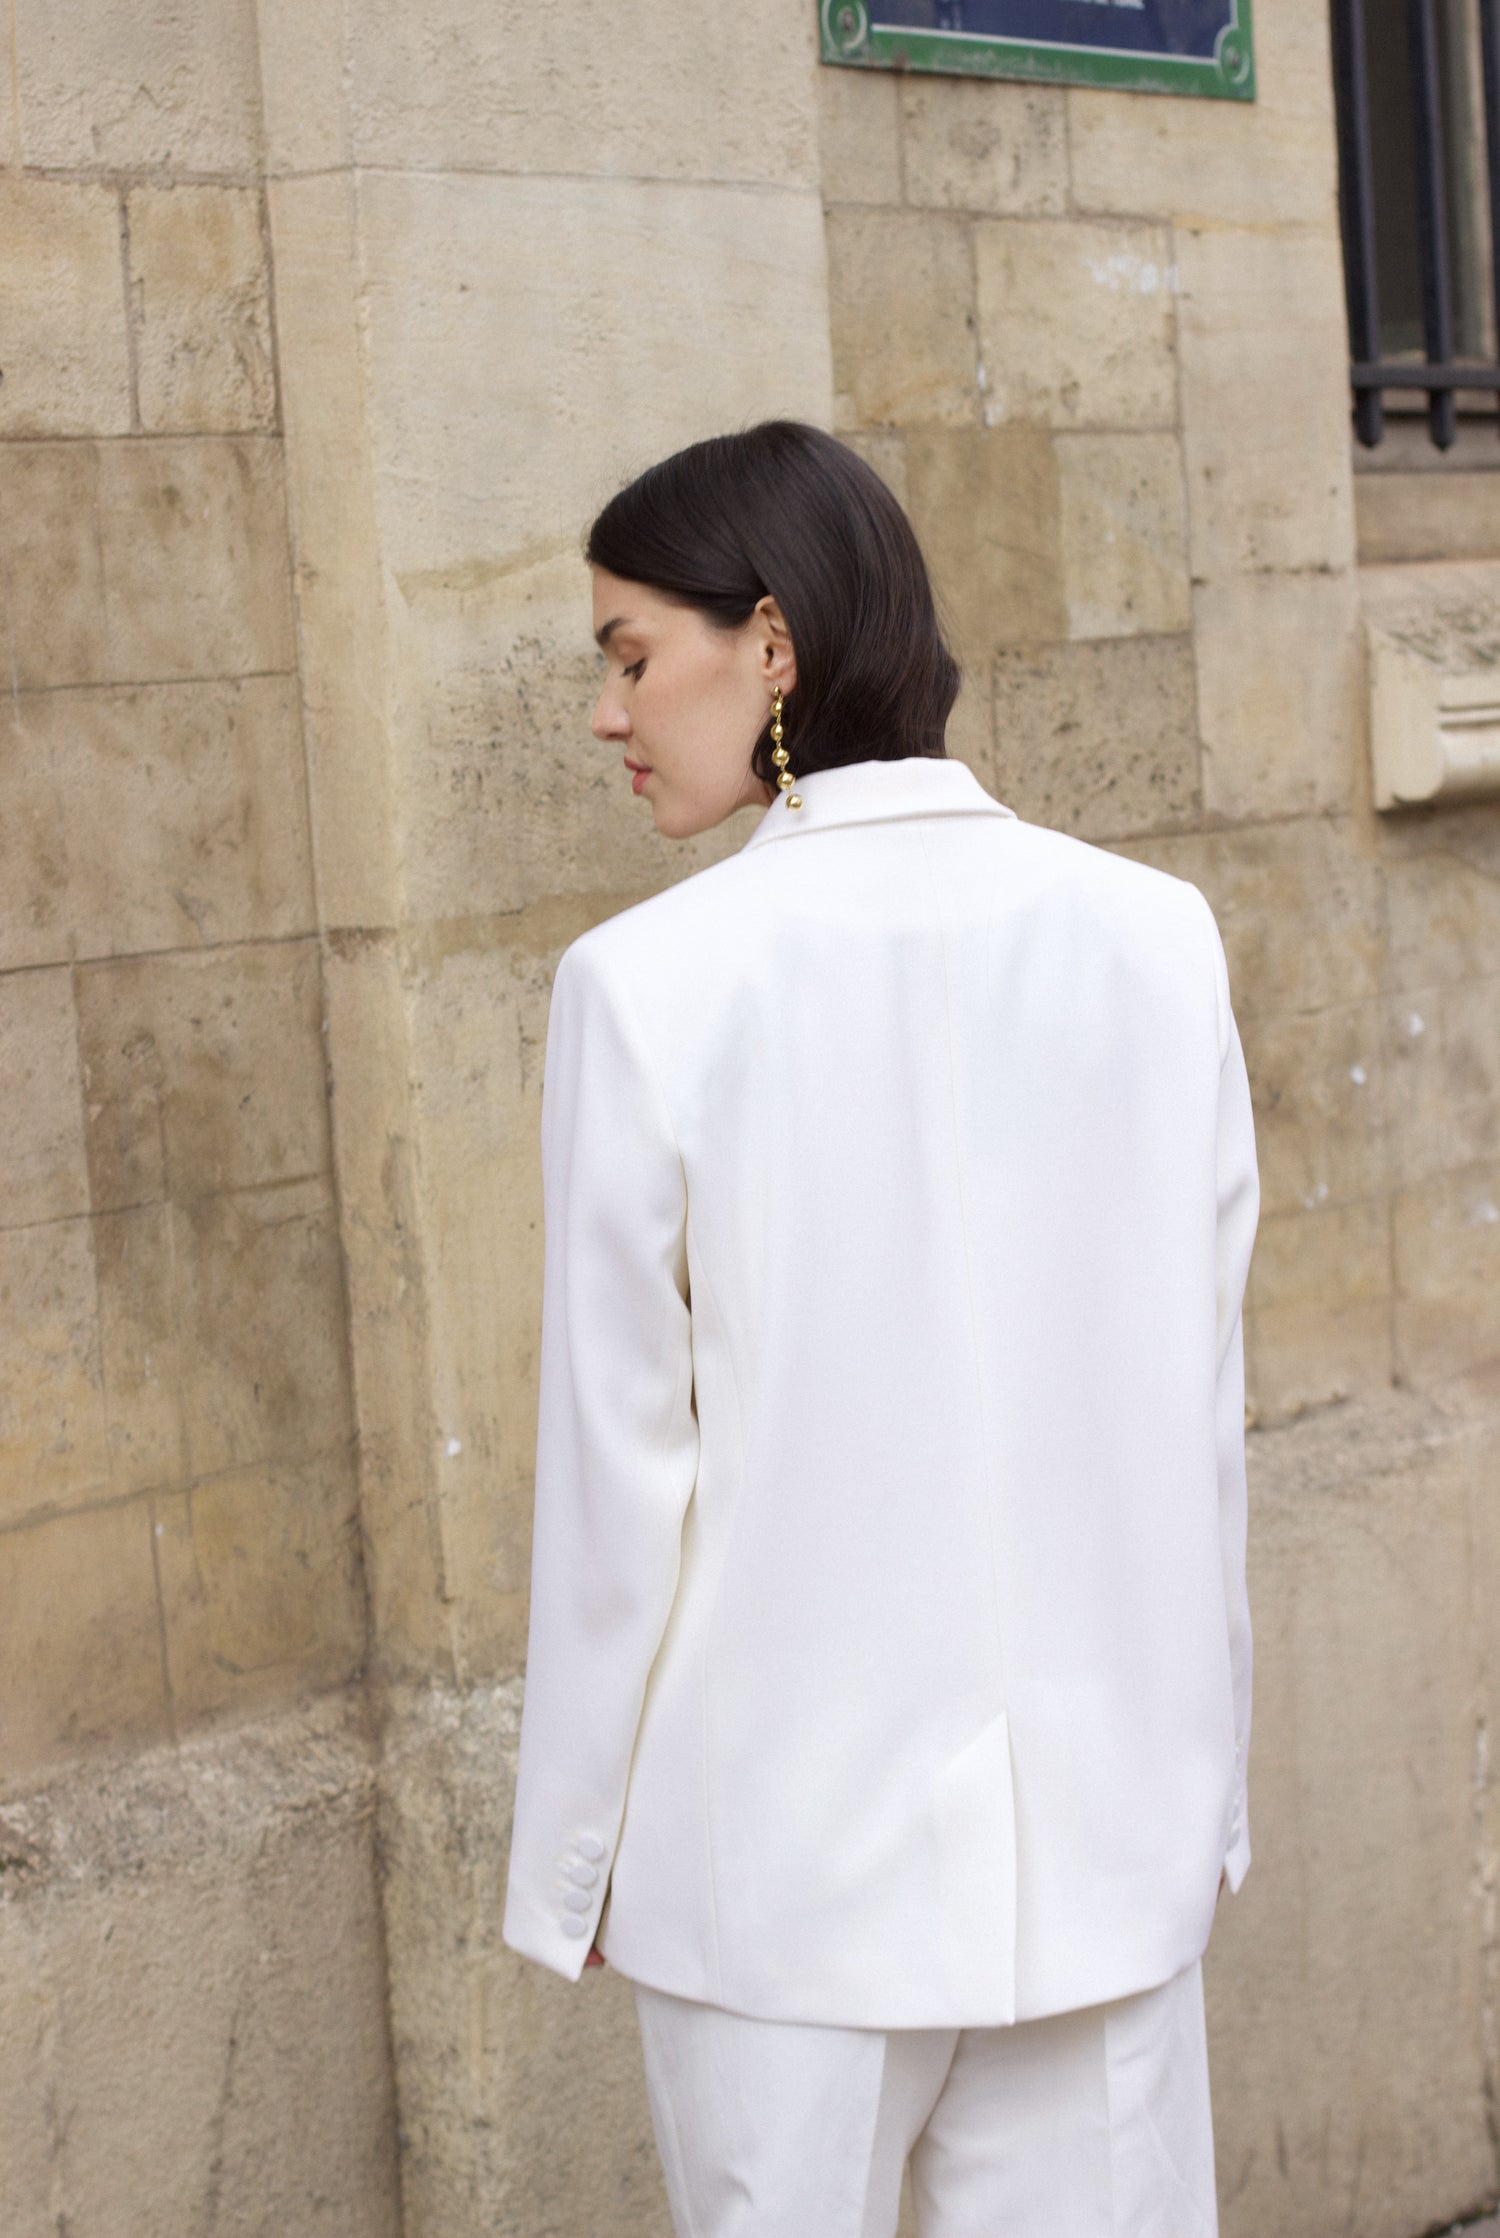 veste smoking femme blanc et noir Made in France par Facettes Studio